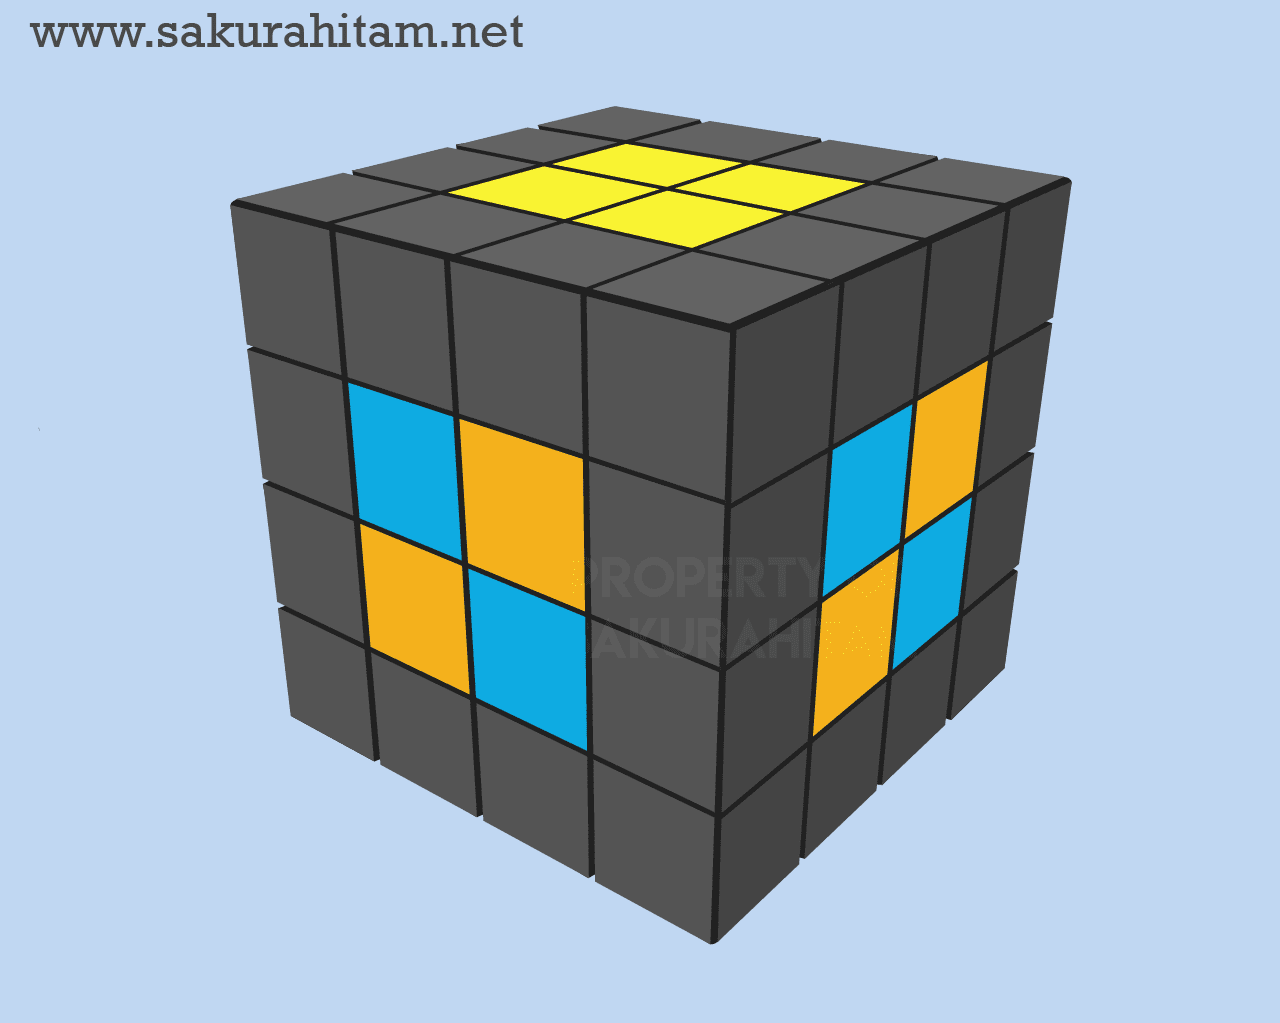 Cara Menyelesaikan Rubik 4x4 Dengan Mudah Sakurahitam